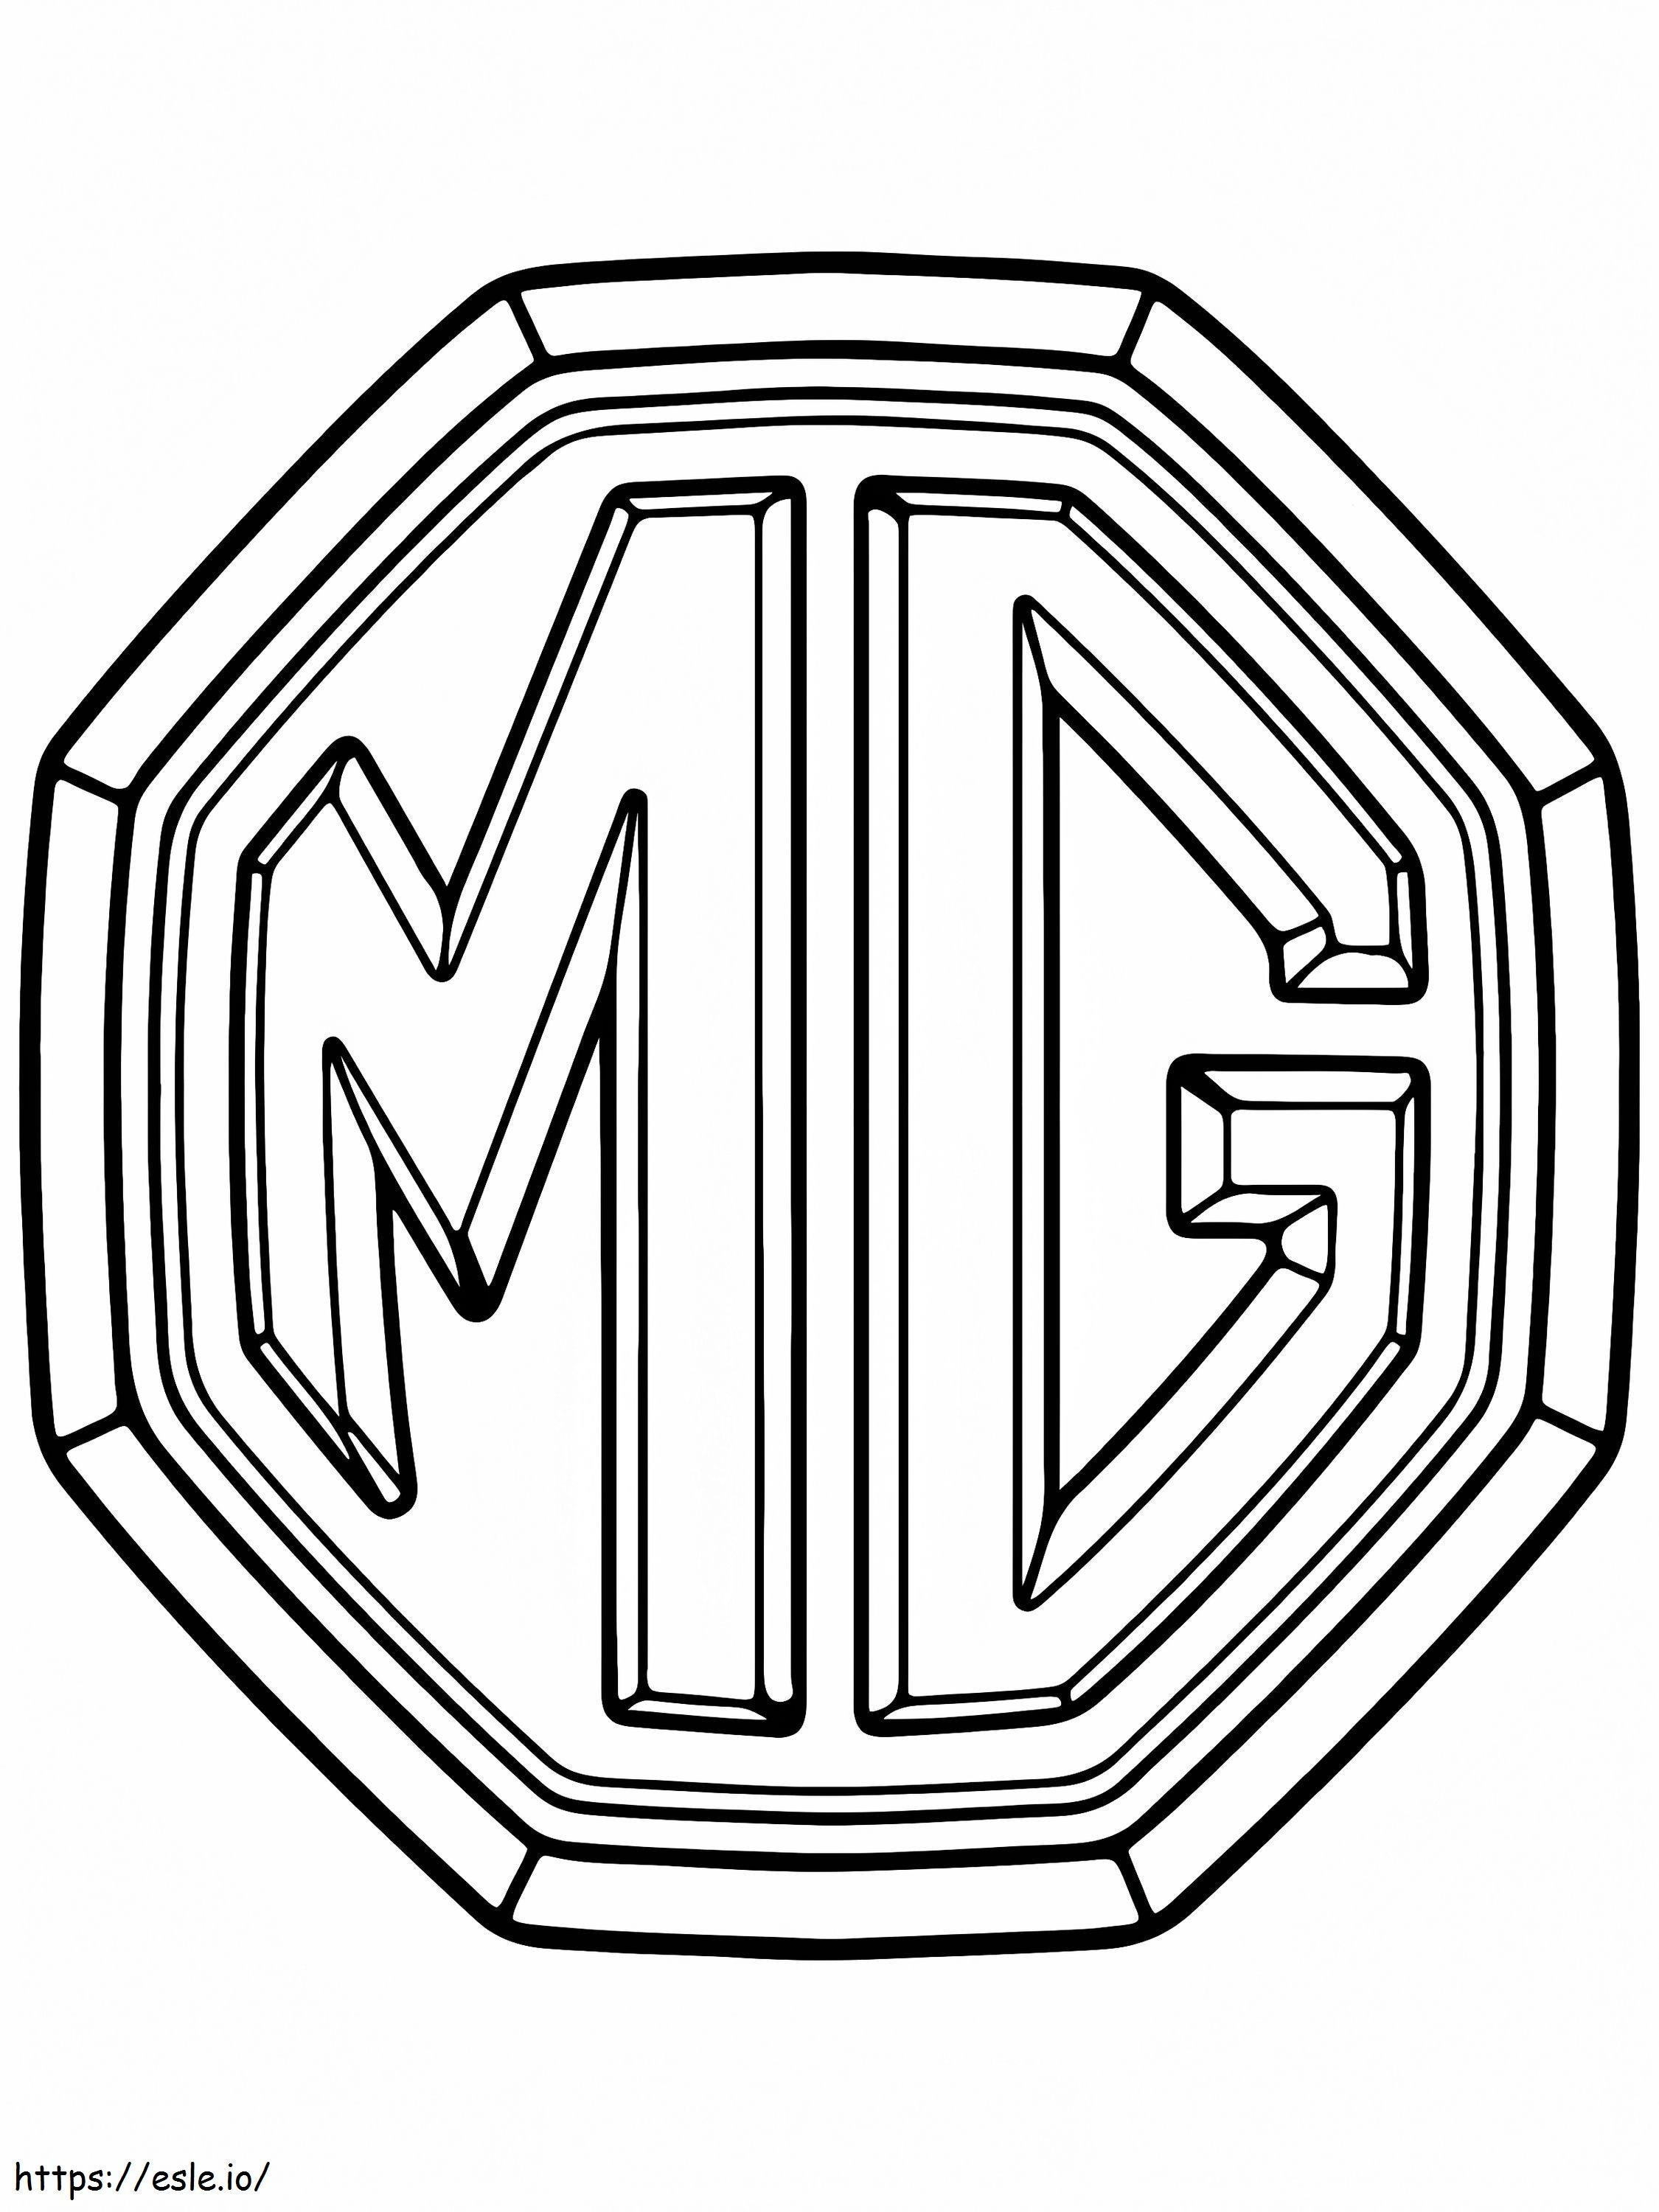 Logotipo Del Coche Mg para colorear